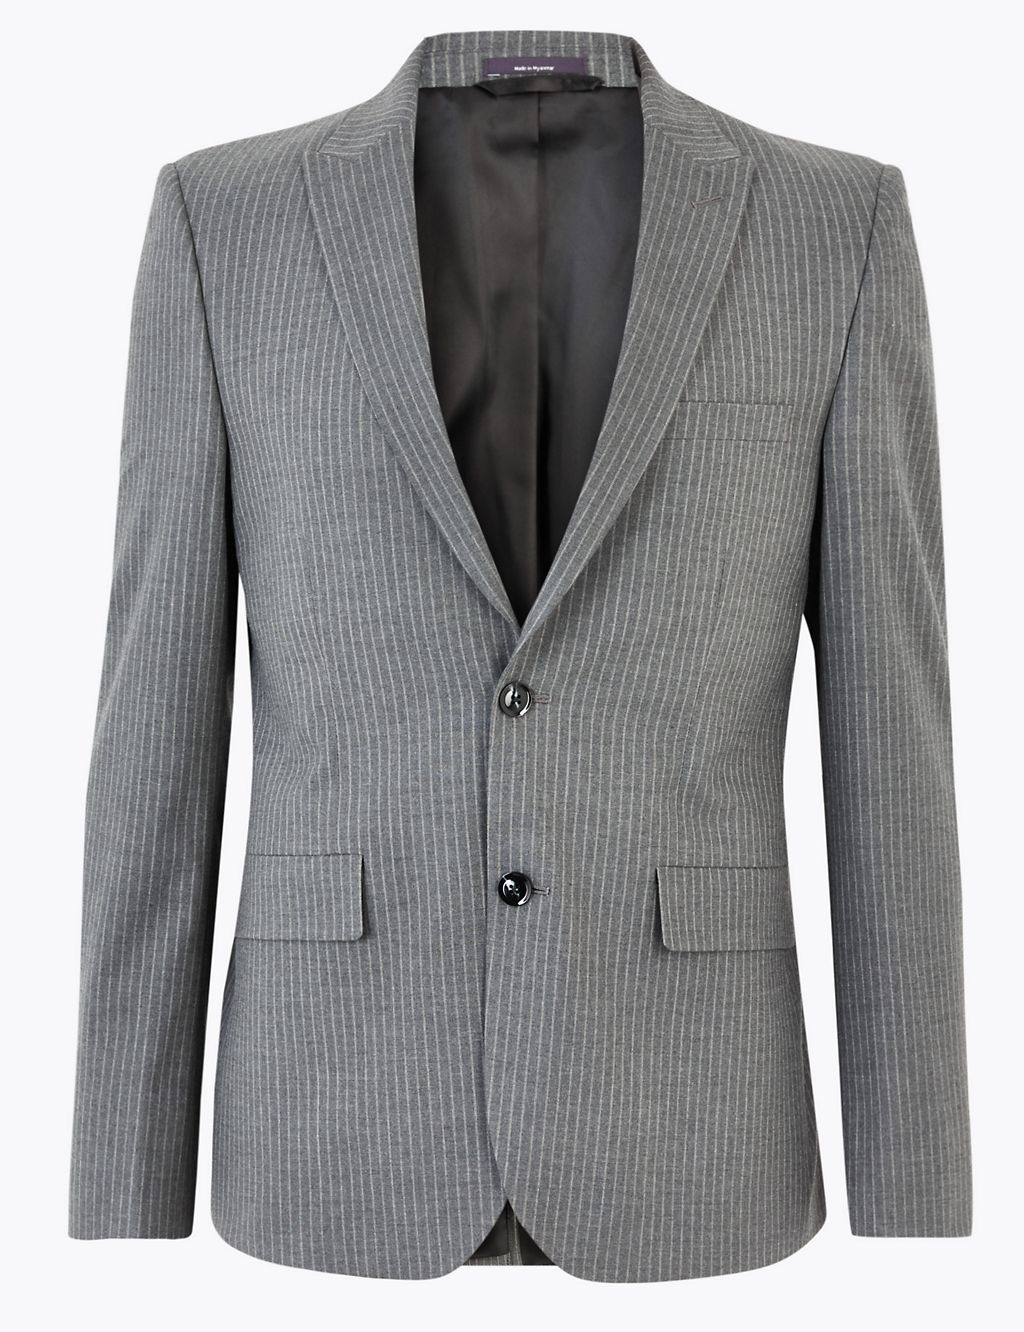 Grey Skinny Fit Striped Jacket 1 of 7